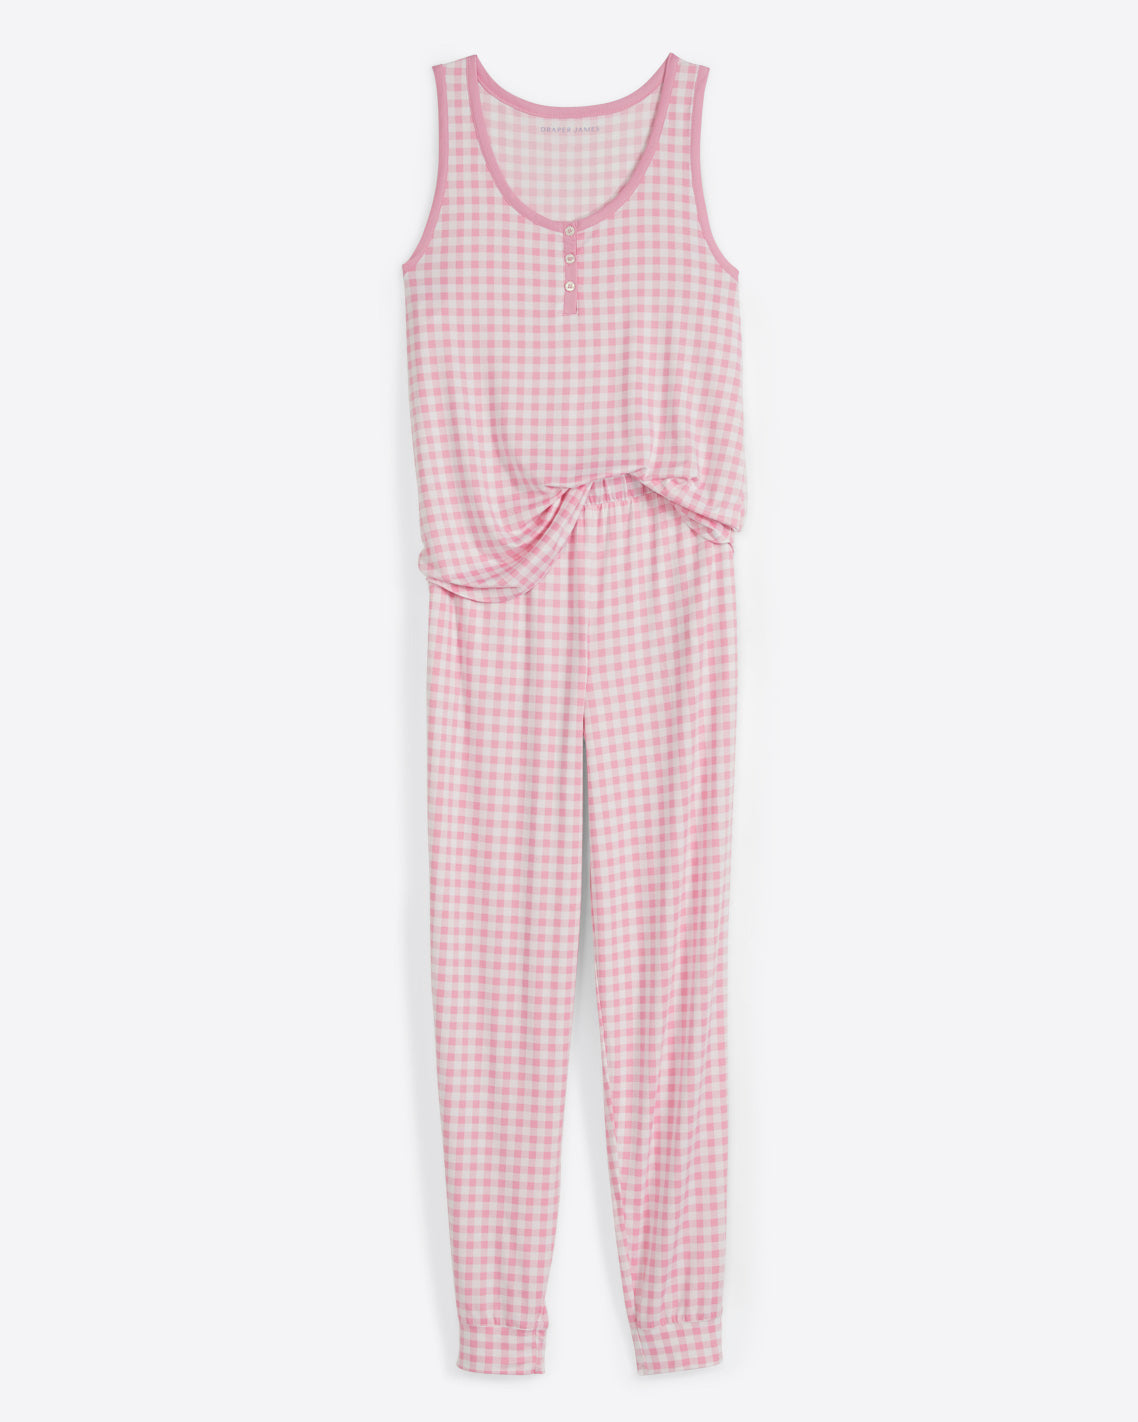 Hillary Pajama Set in Light Pink Gingham